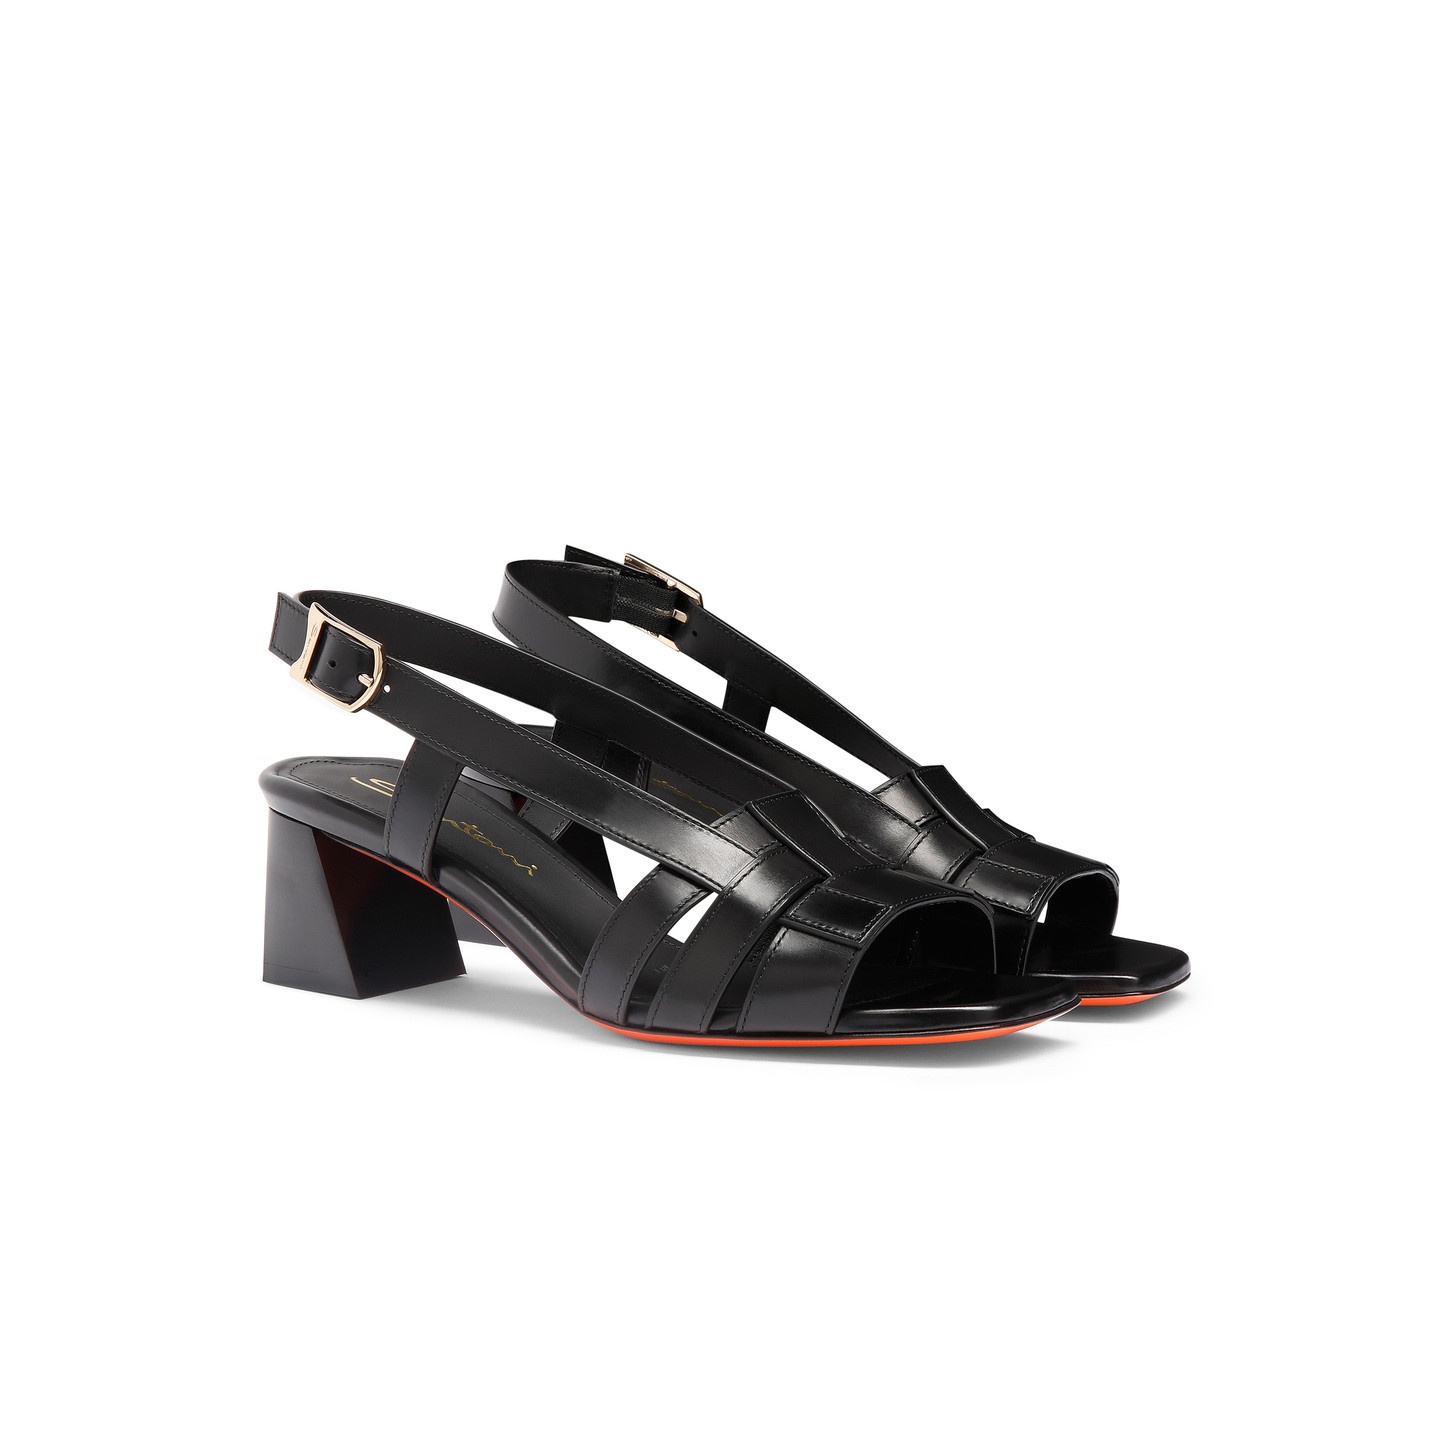 Women's black leather mid-heel Beyond sandal - 3